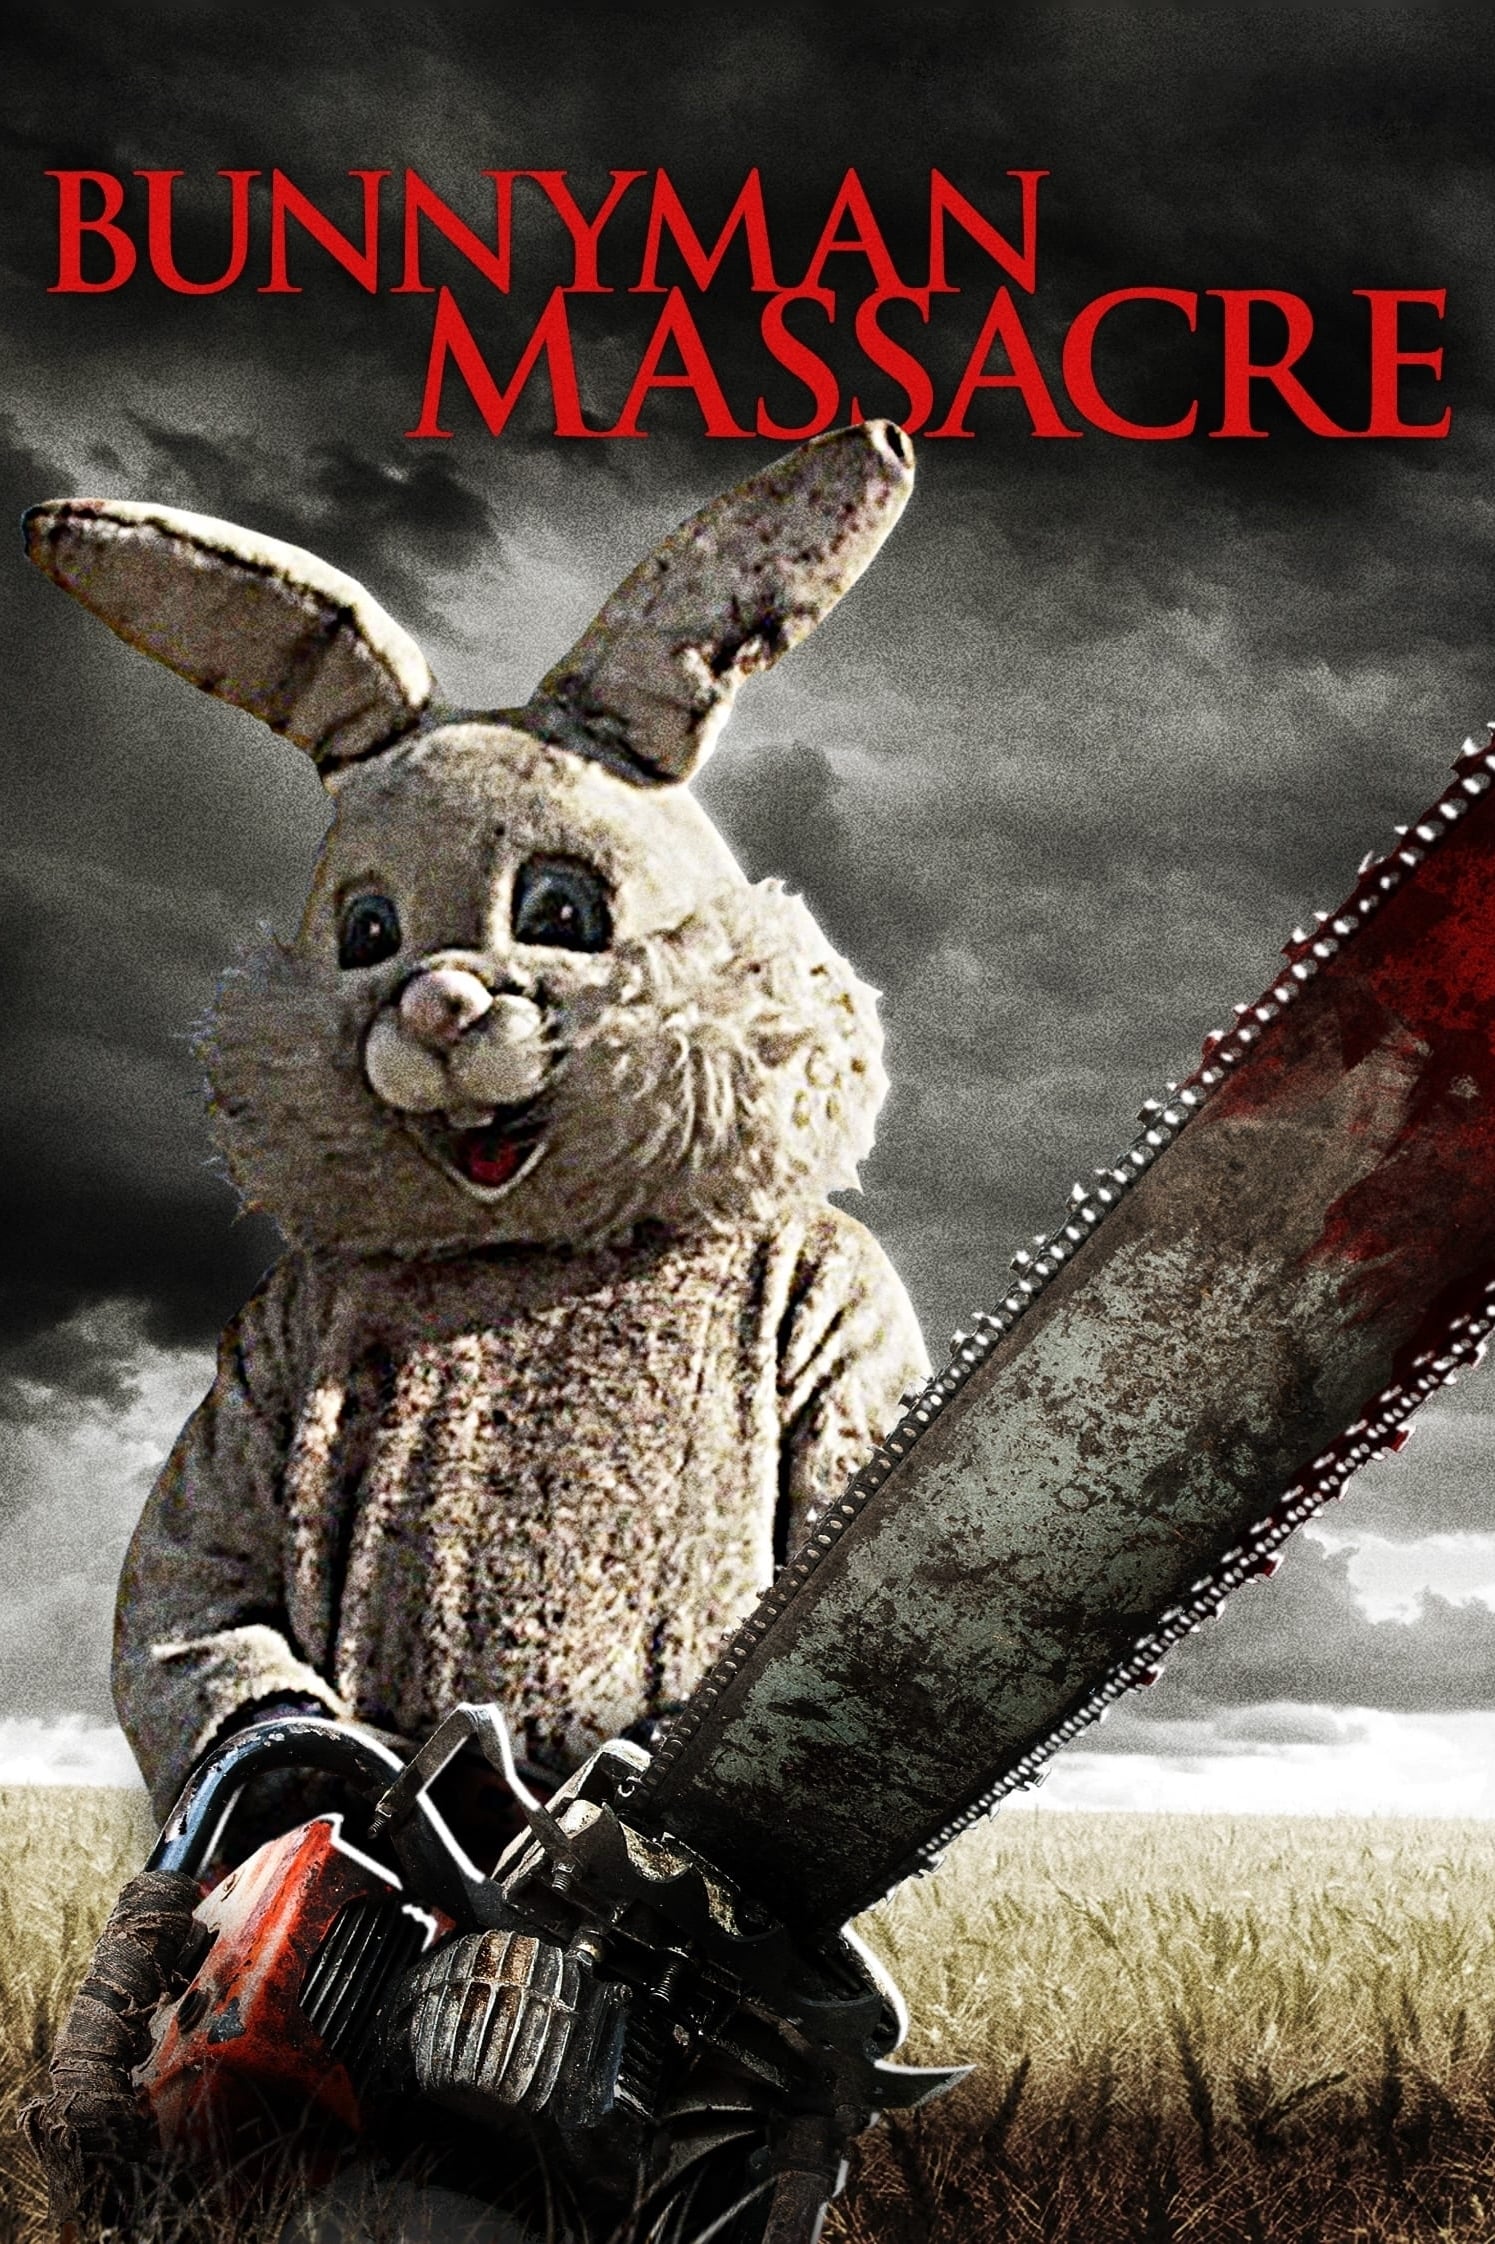 The Bunnyman Massacre film